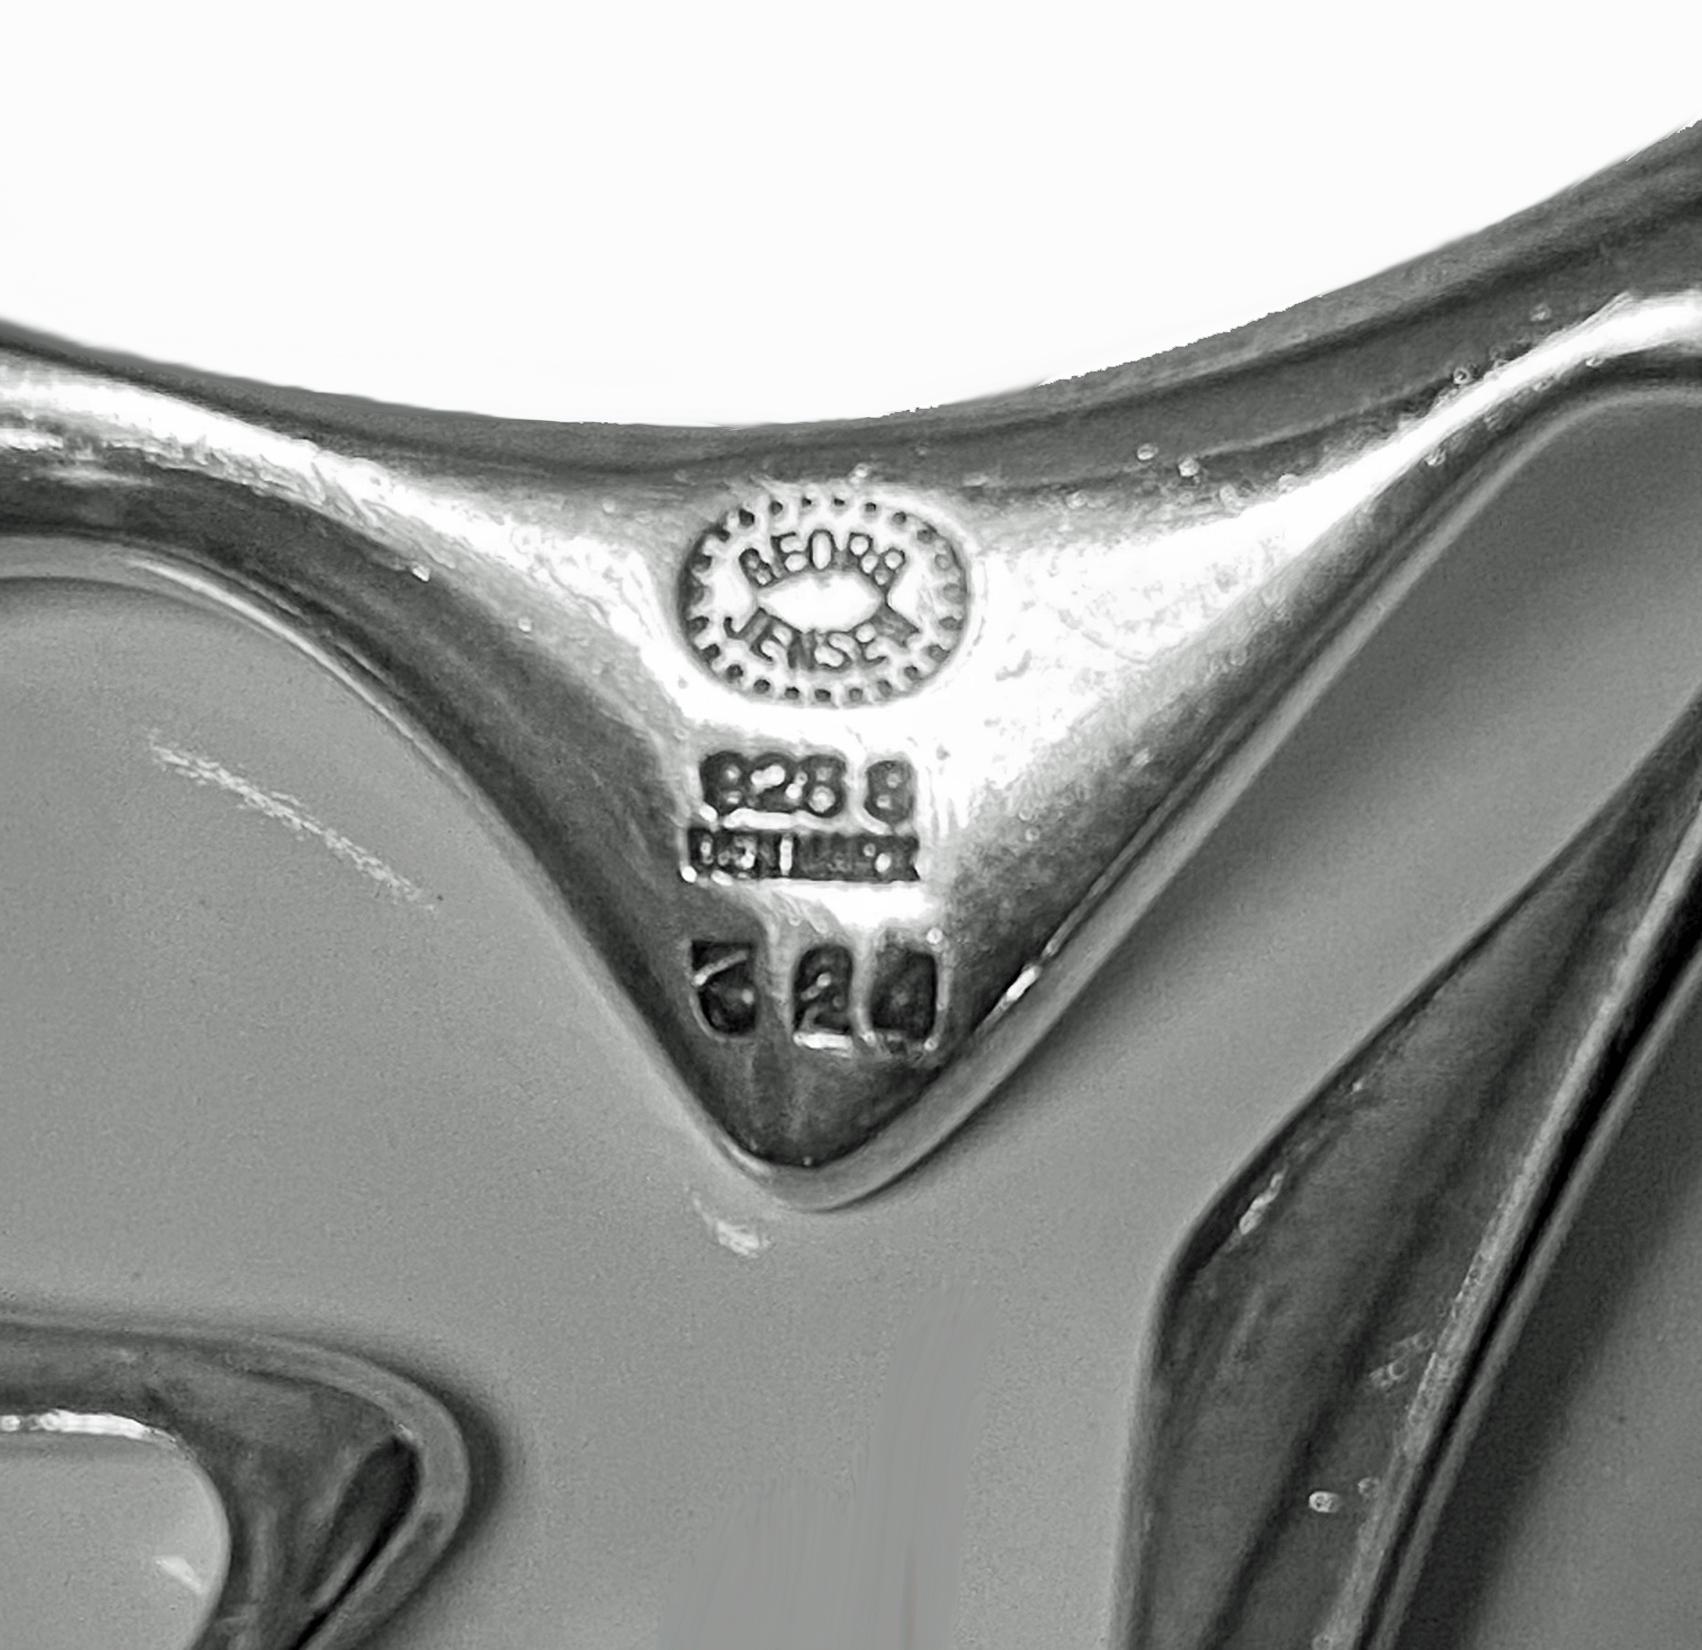 Georg Jensen Sterling Silver brooch, design #324 by Henning Koppel 1